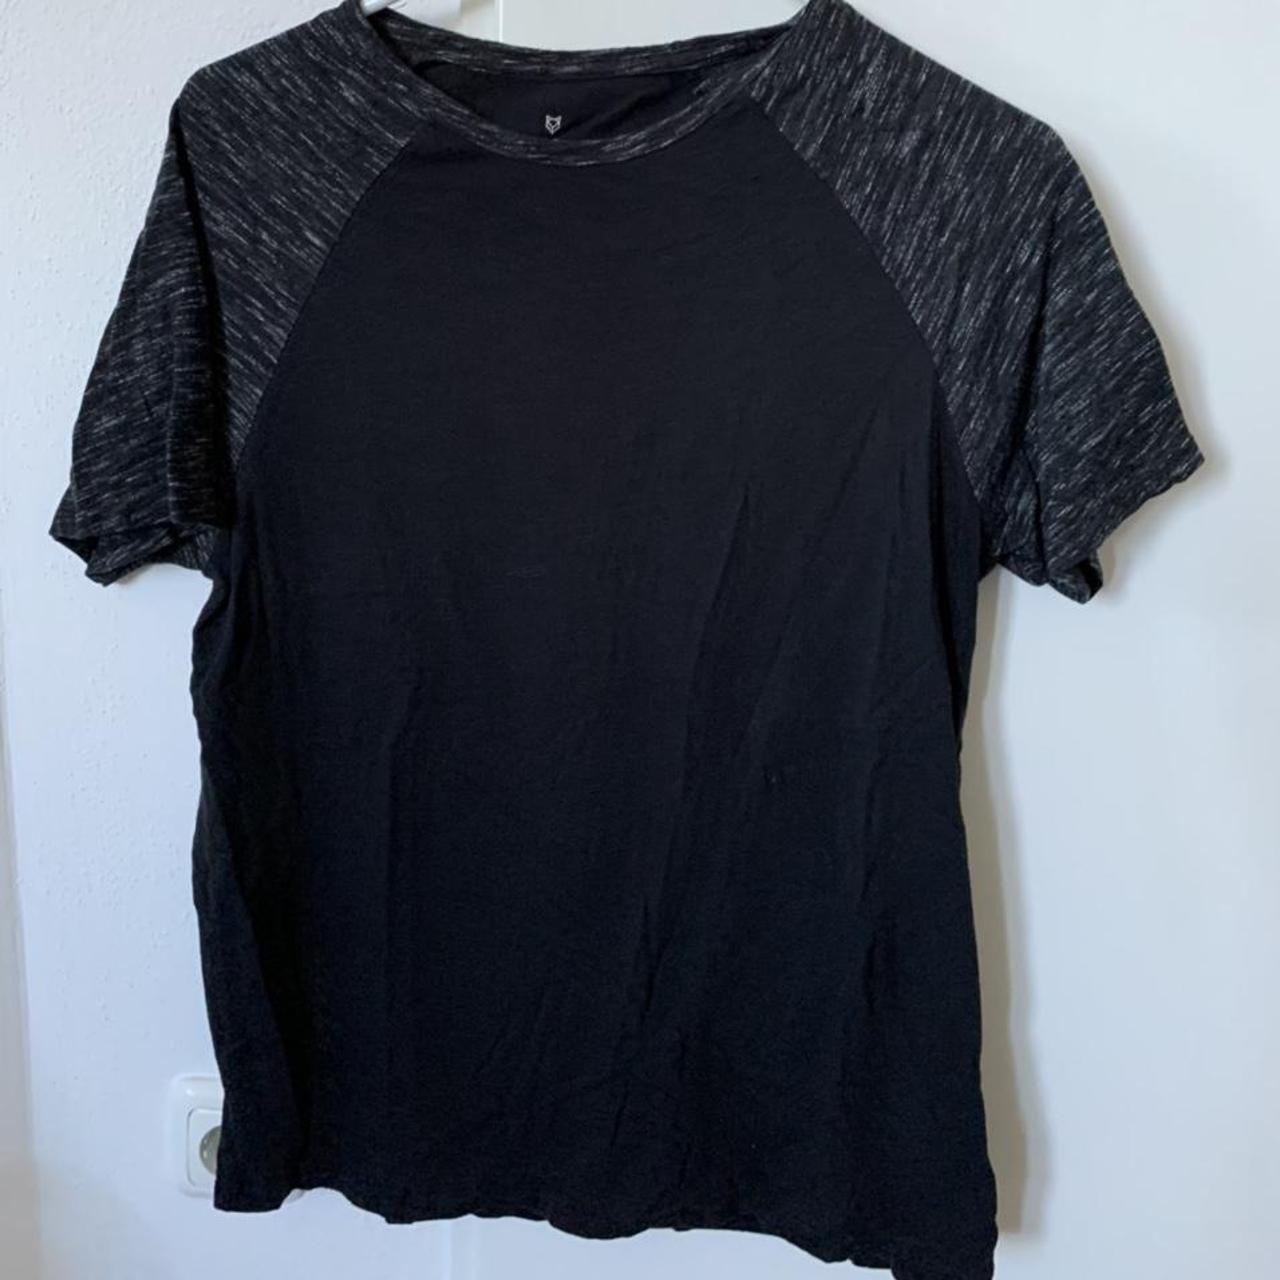 black and dark gray t-shirt - Depop